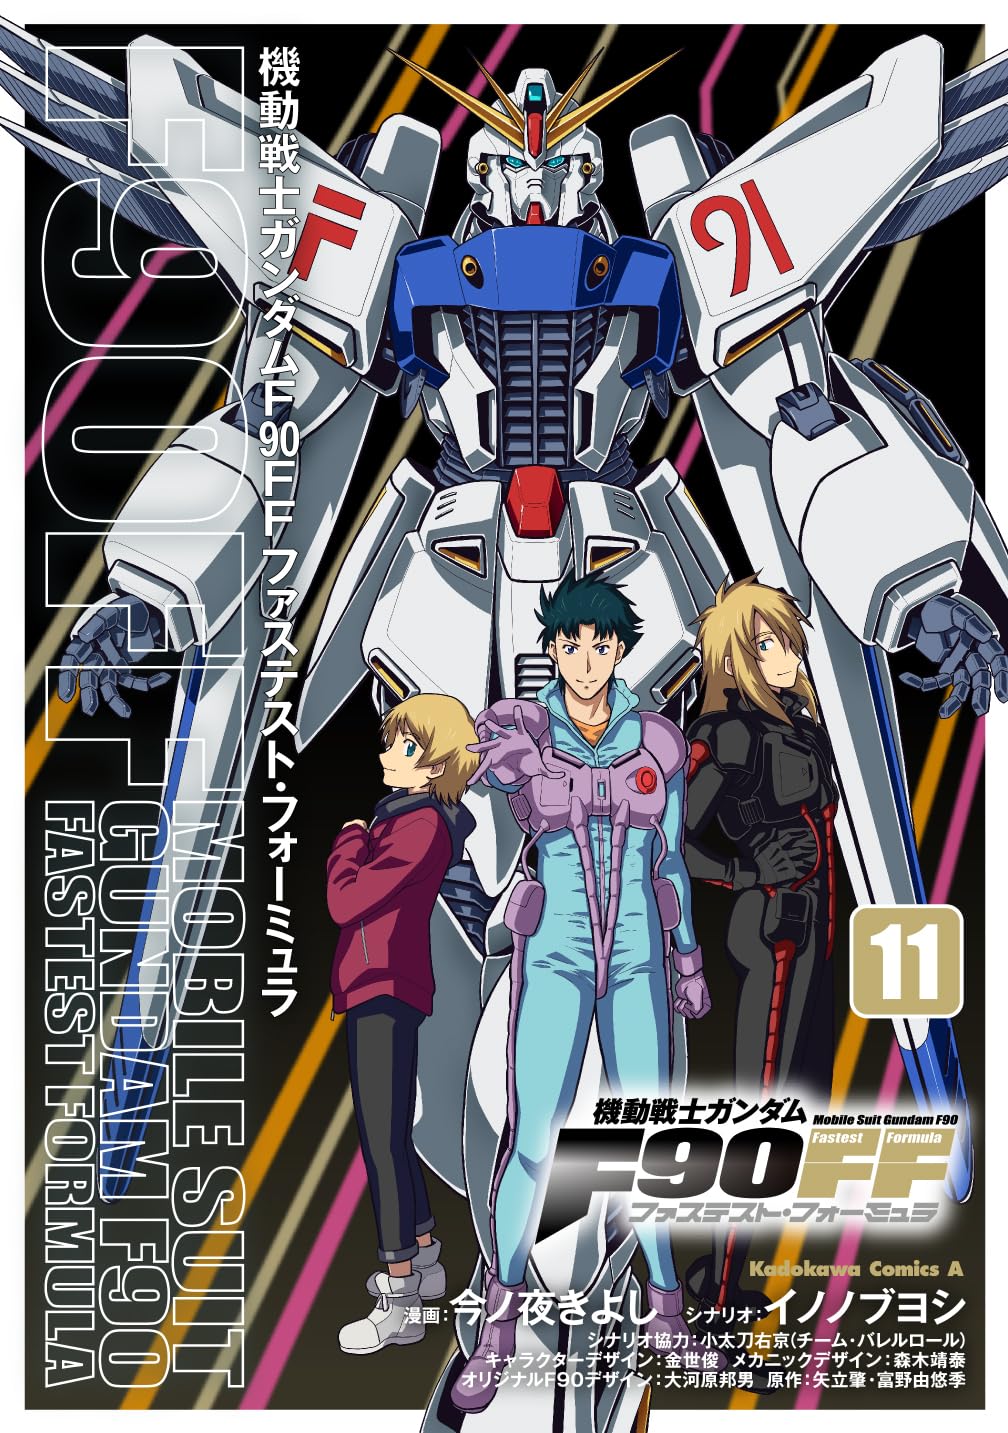 Mobile Suit Gundam F90FF Fastest Formula #11 /Comic